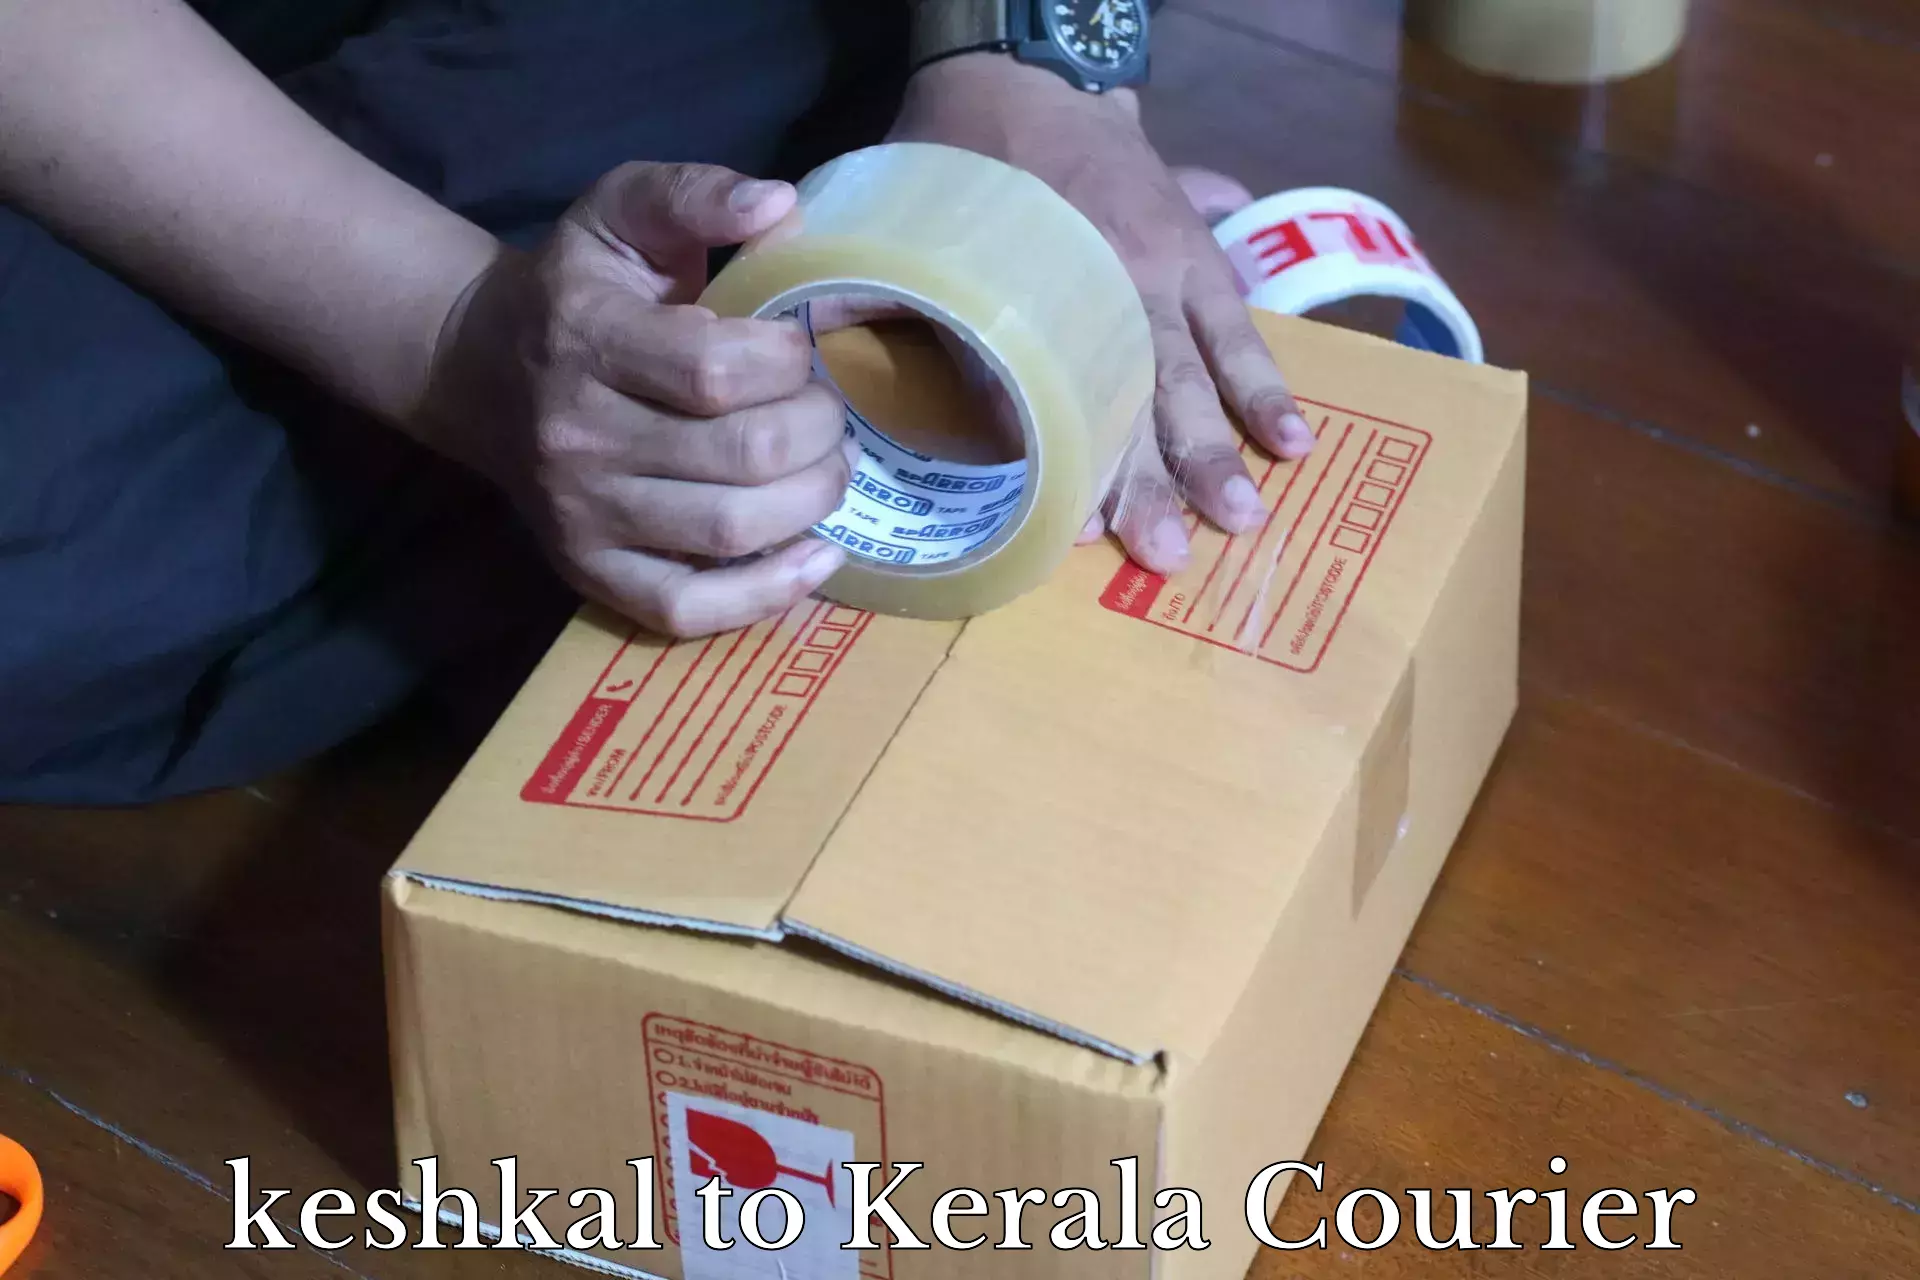 Urban courier service keshkal to Kerala